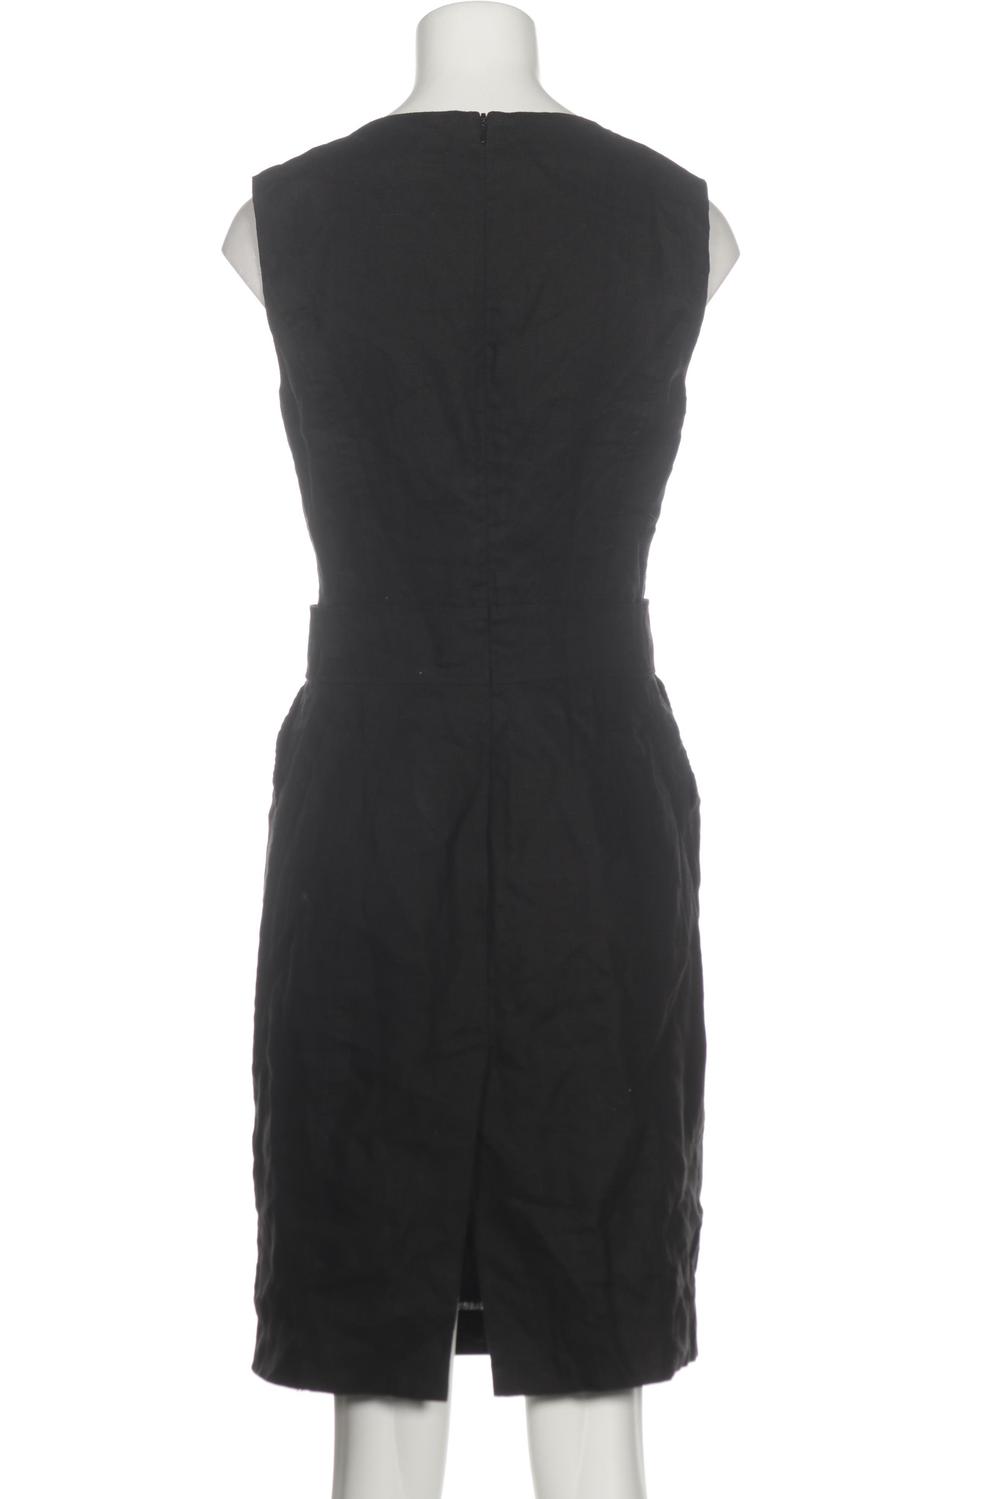 MEXX Damen Kleid DE 34 Second Hand kaufen | ubup